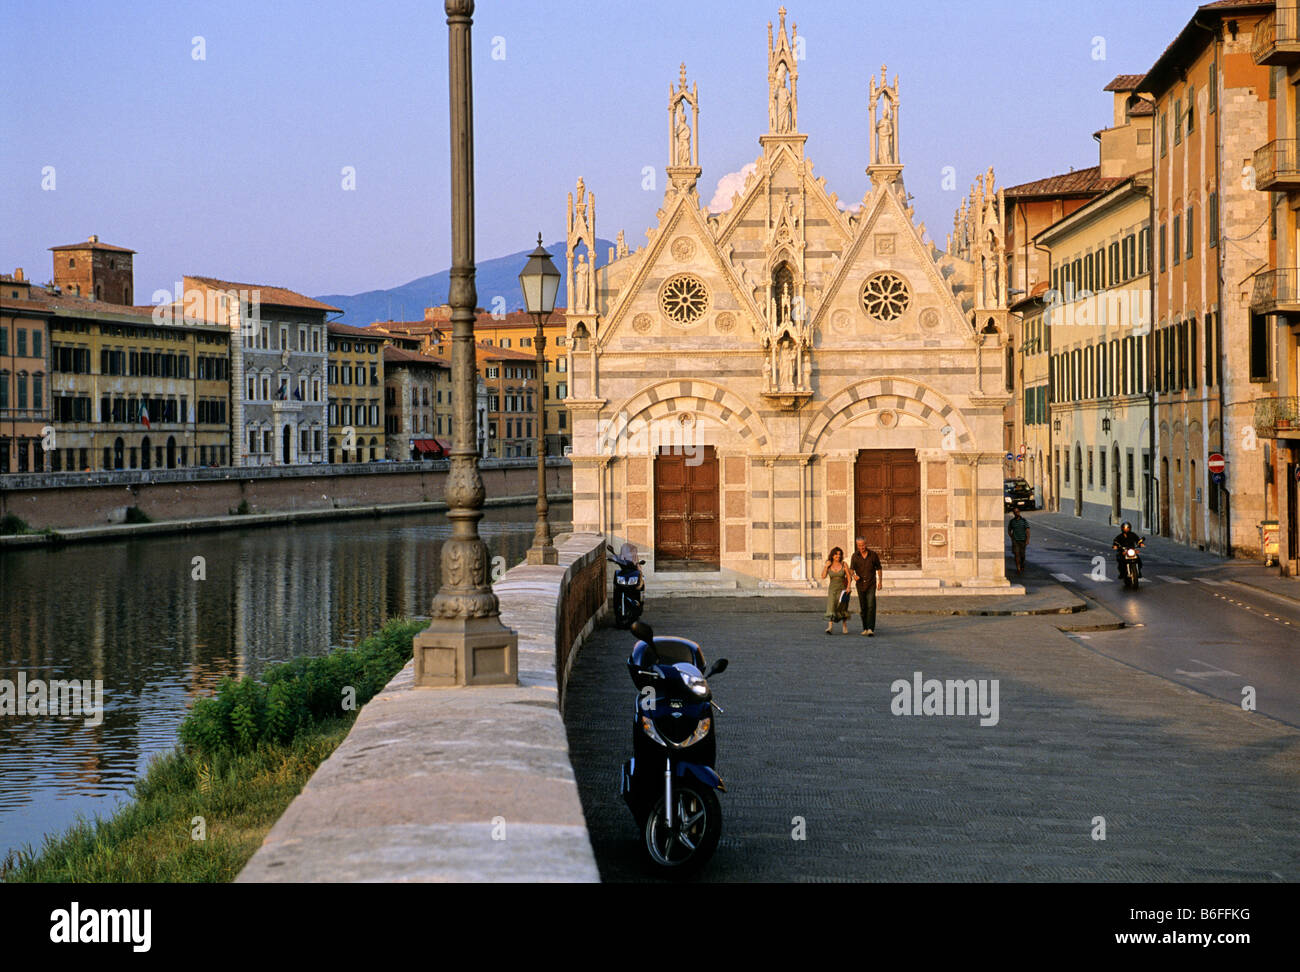 Palazzo alla Giornata, Arno, Santa Maria della Spina, Pisa, Tuscany, Italy, Europe Stock Photo